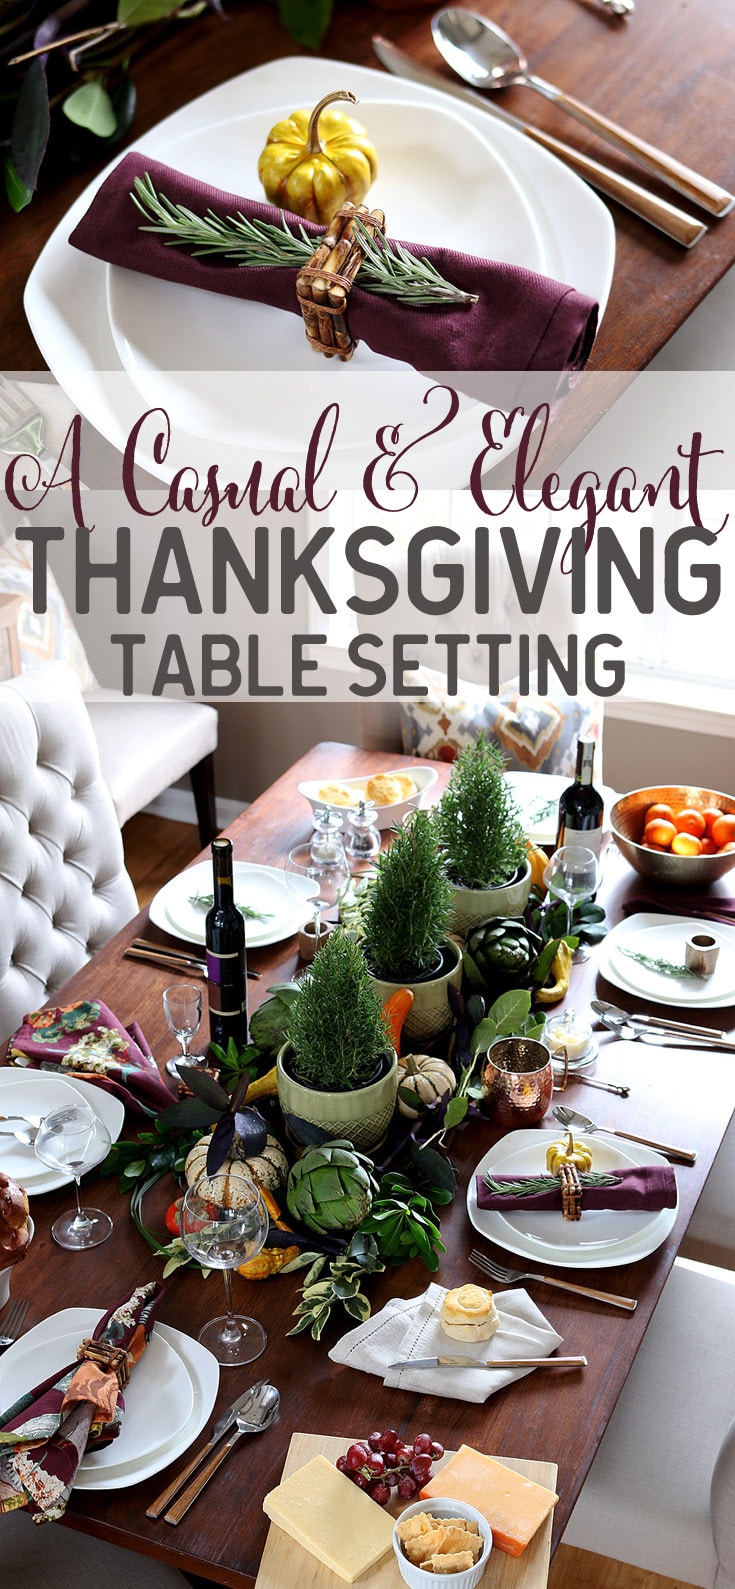 A casual yet elegant Thanksgiving table setting via Jen Woodhouse